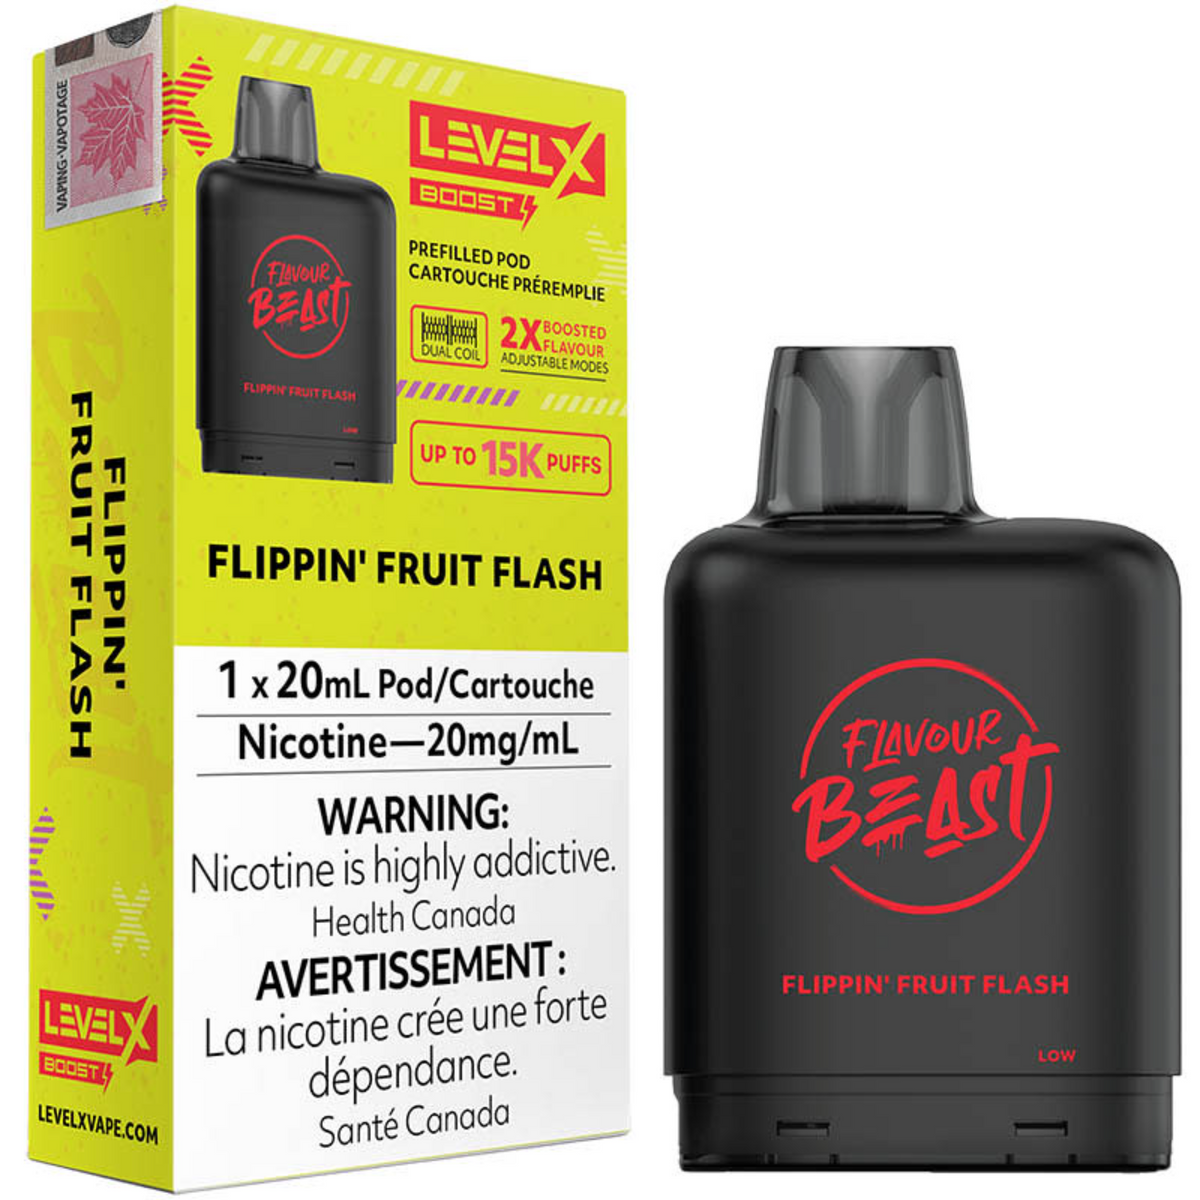 Level X Boost Pod - Flavour Beast: Flippin' Fruit Flash